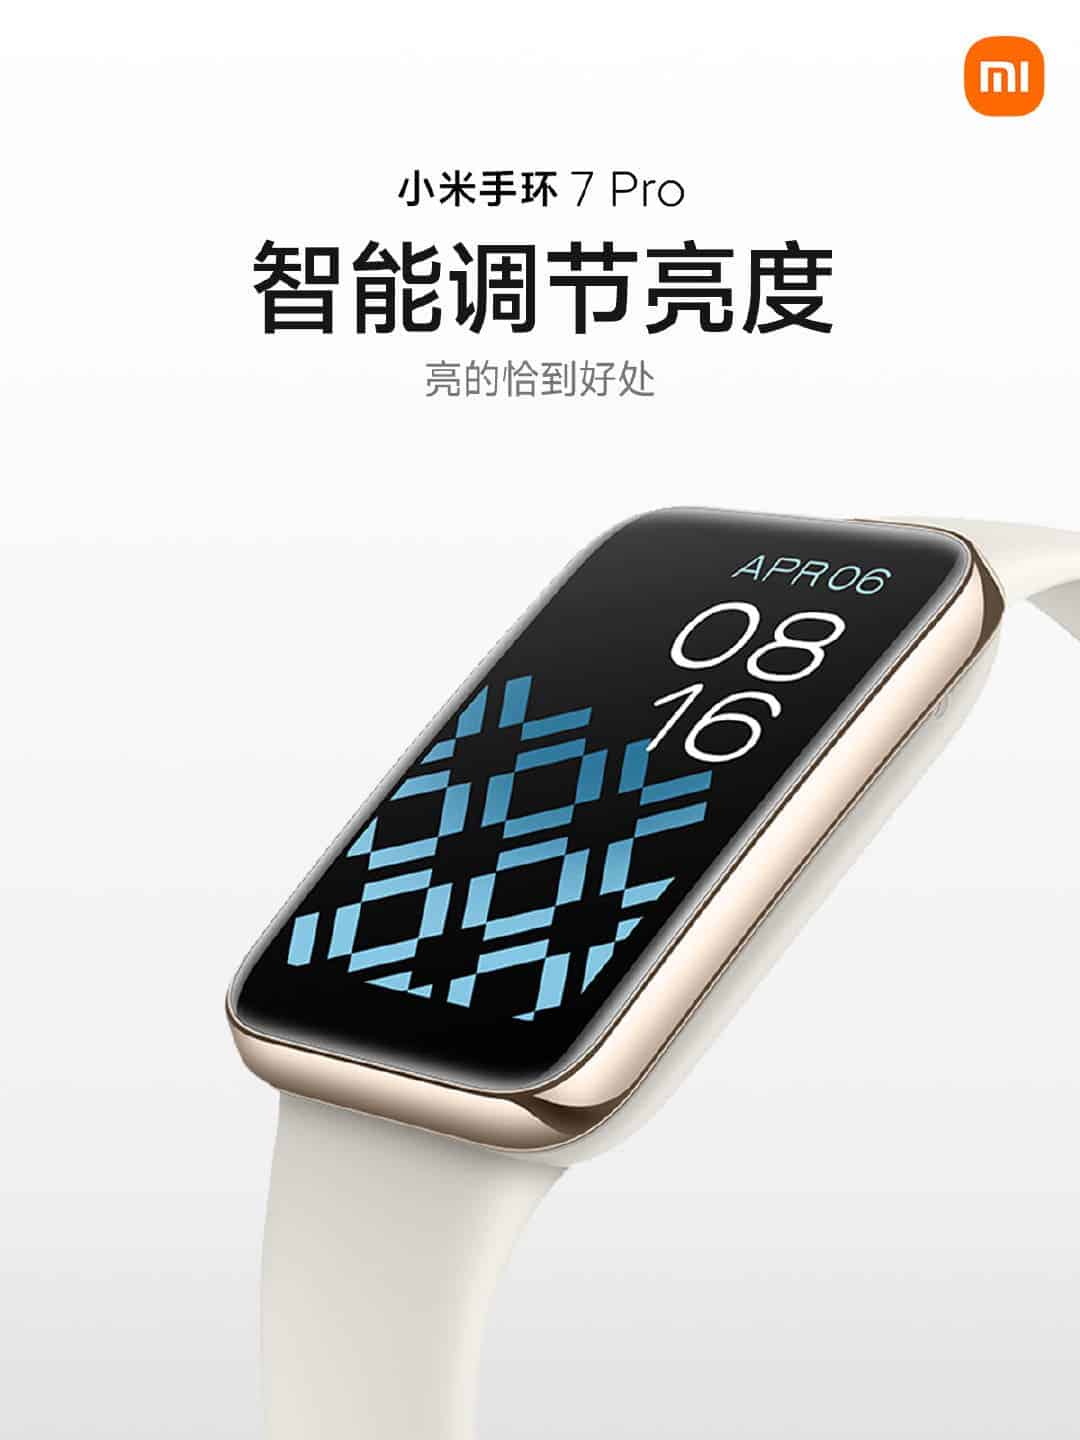 Xiaomi Mi Band 7 Pro design